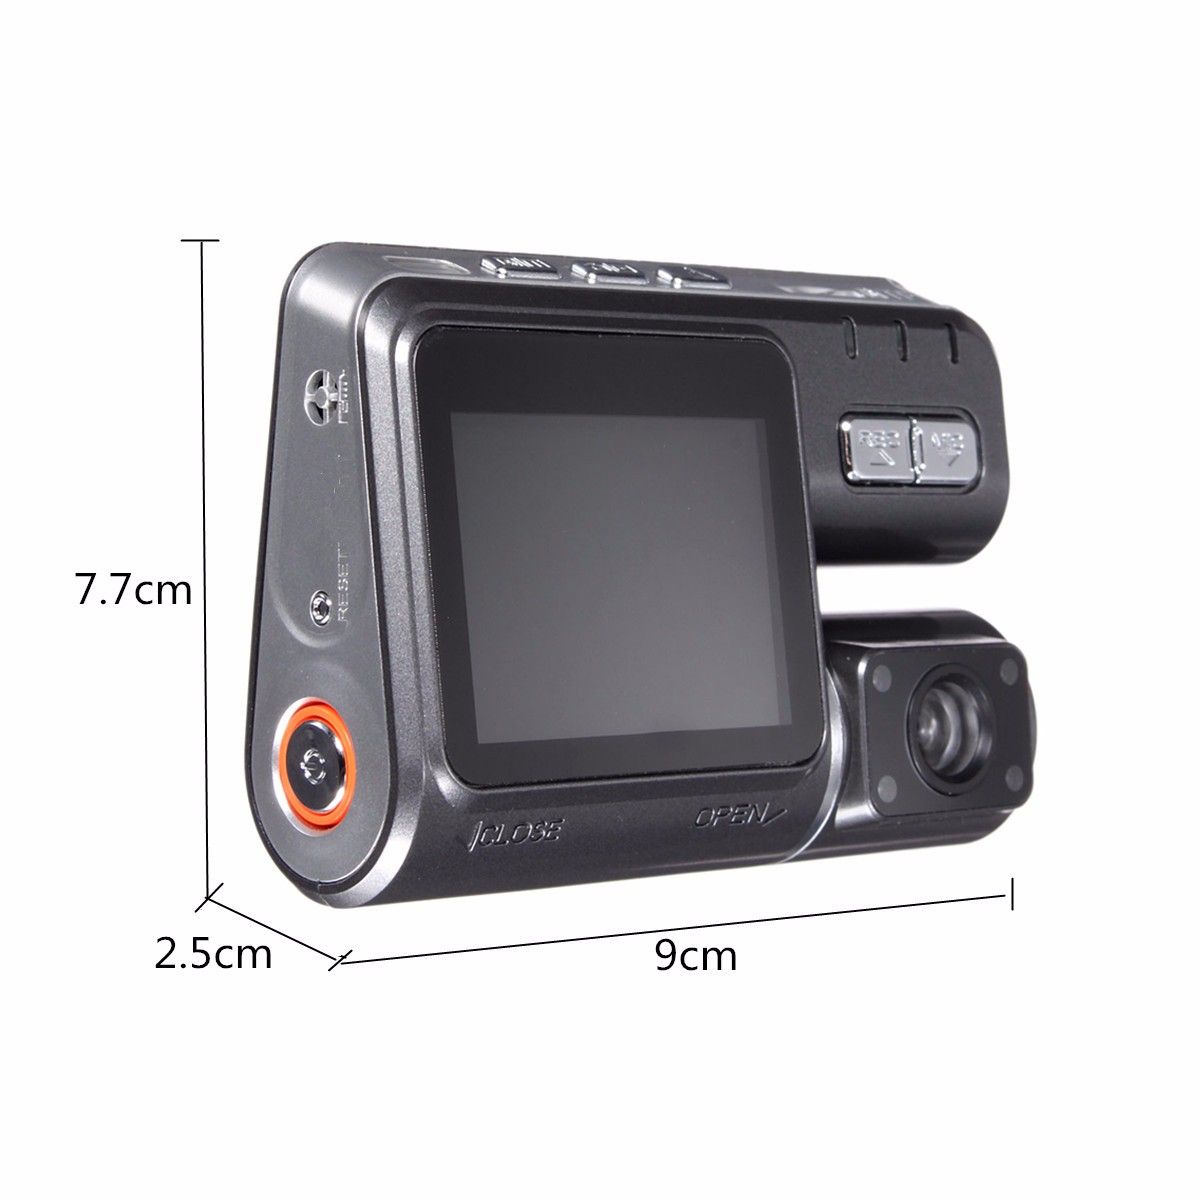 Dash-Cam-DVR-Car-Video-Camera-Recorder-Night-Vision-G-Sensor-Crash-1080P-2-LCD-974916